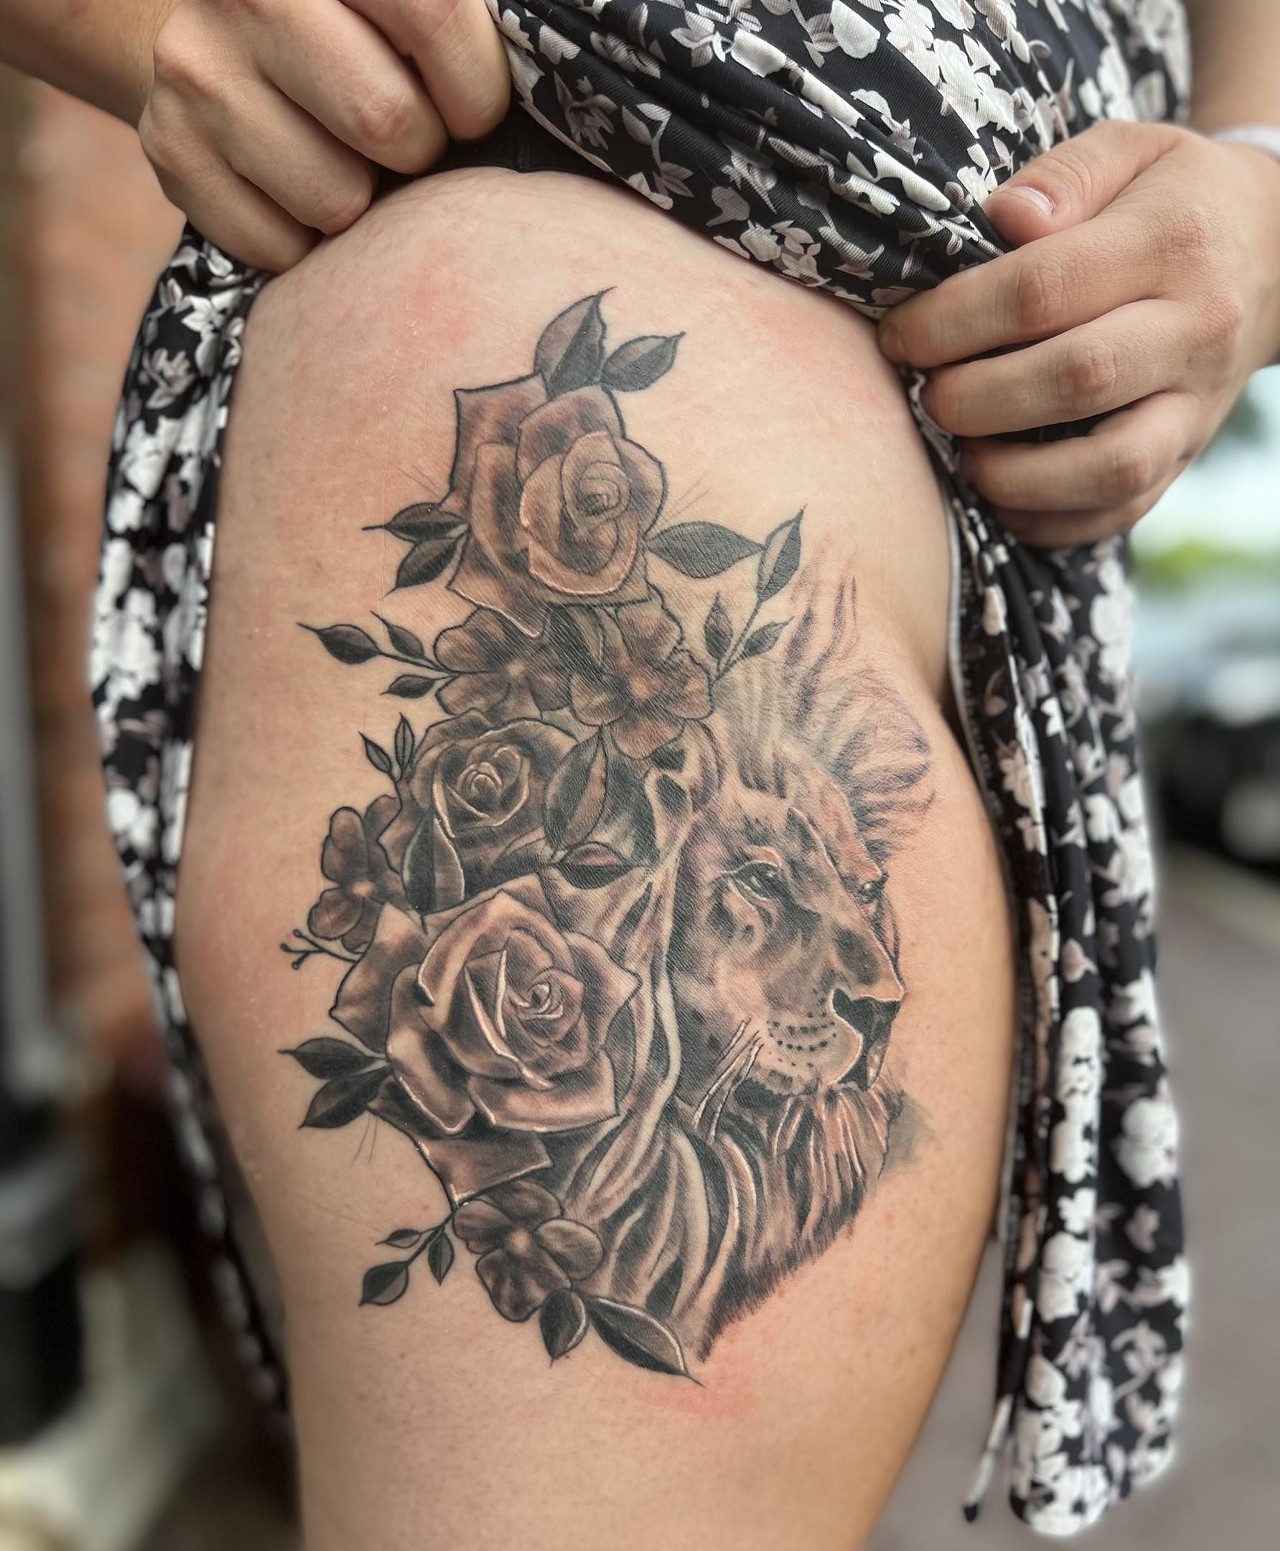 An example of Valencia's organic tattoo work.